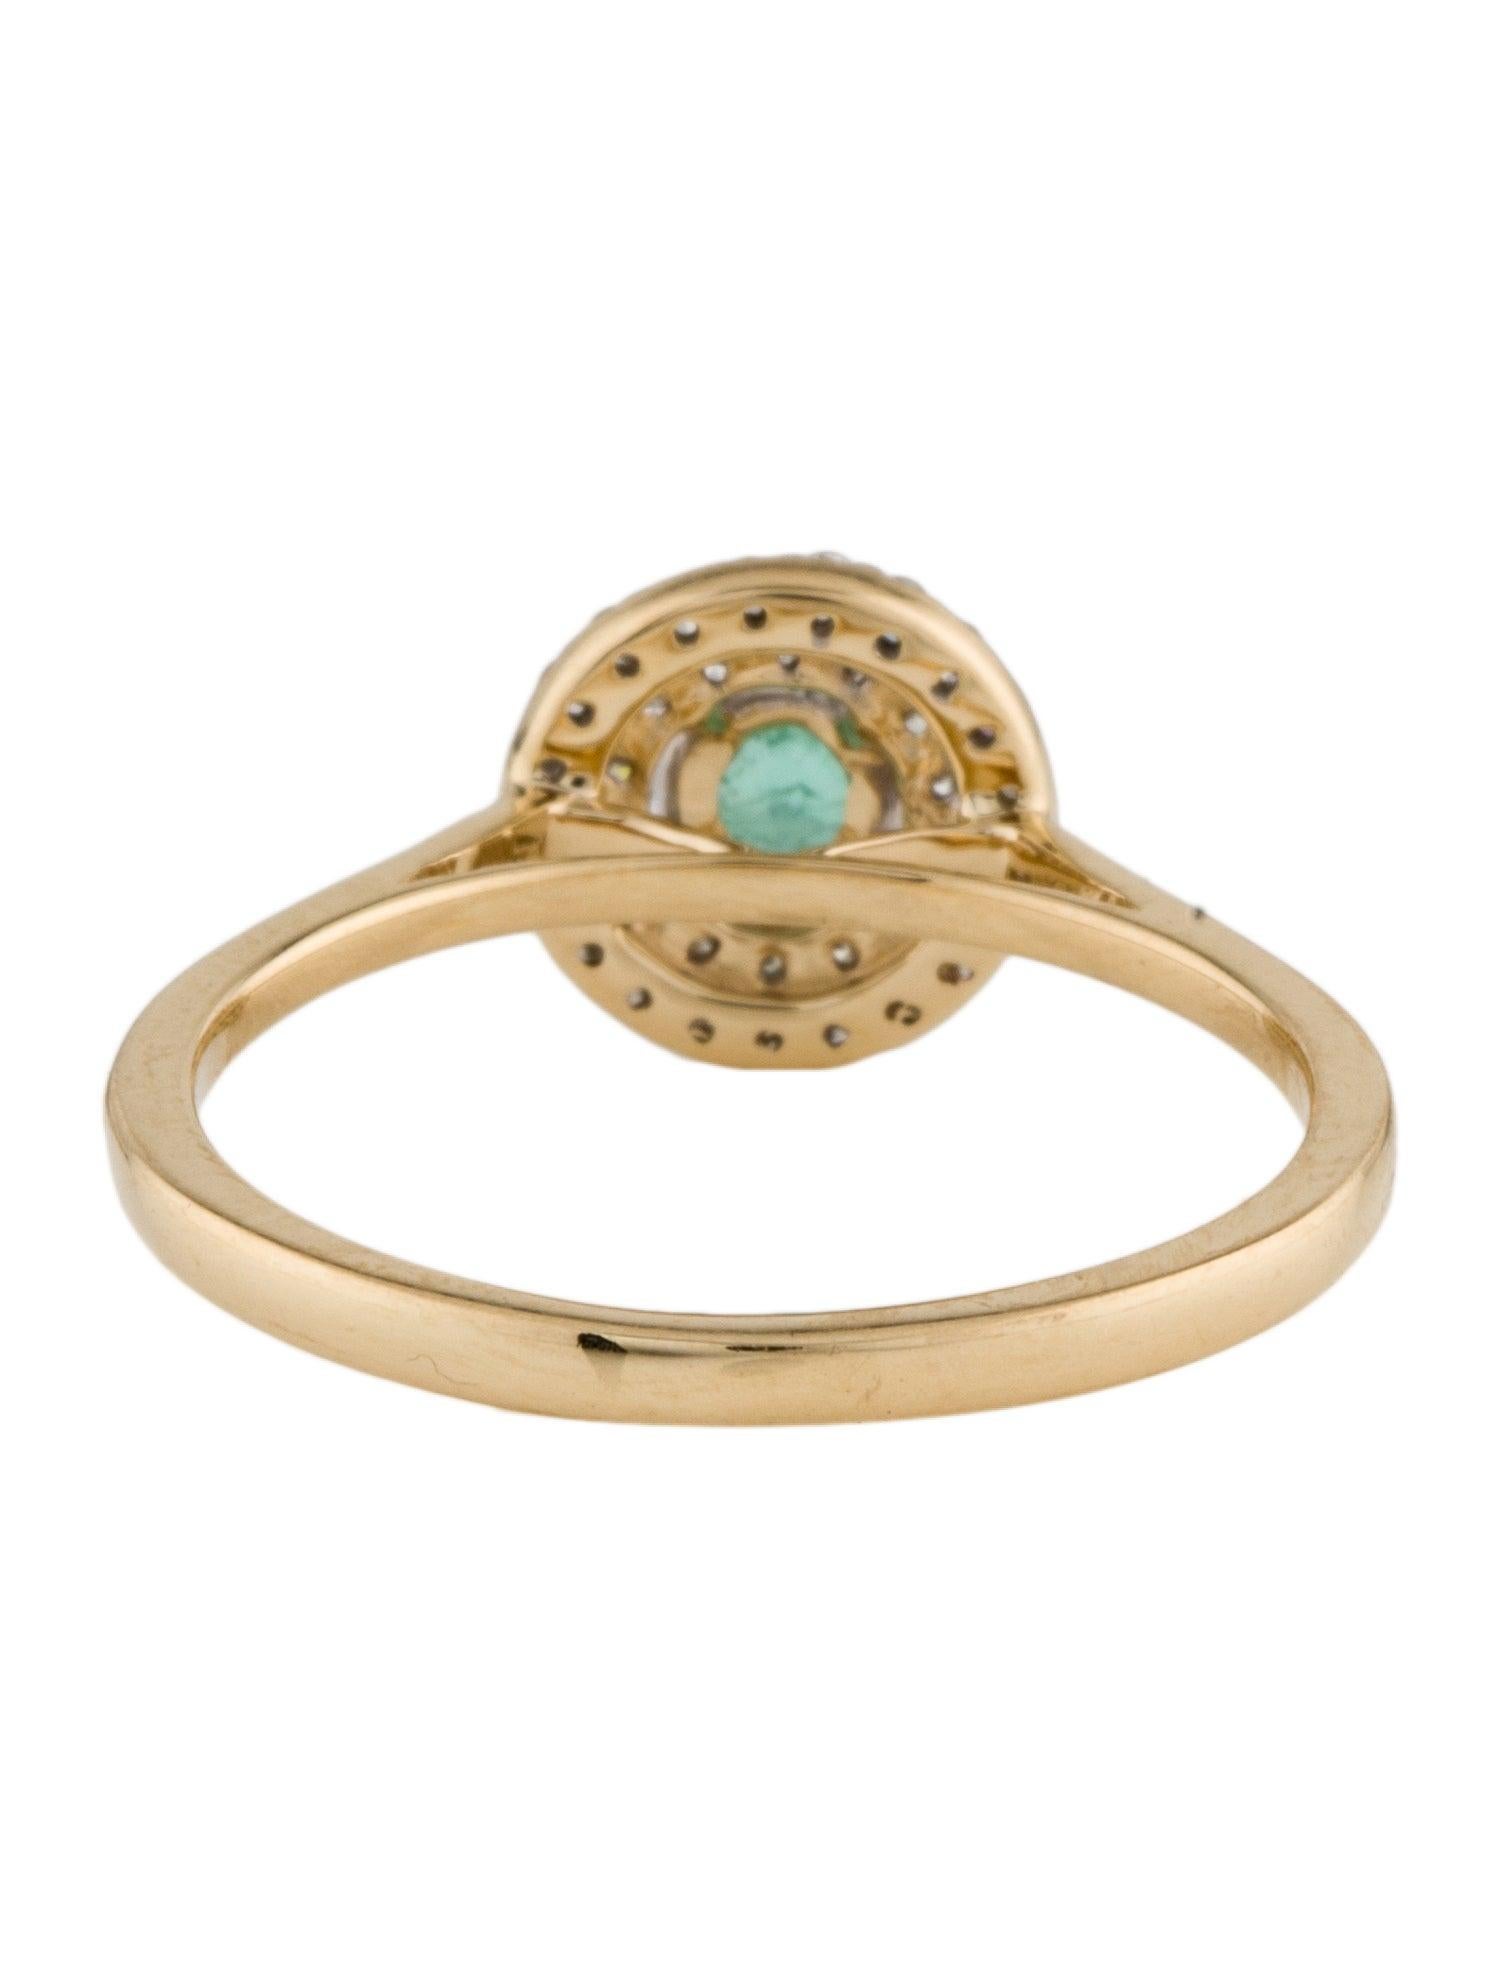 Brilliant Cut Elegant 14K Emerald & Diamond Cocktail Ring - Size 6.5  Vintage Gemstone Ring For Sale